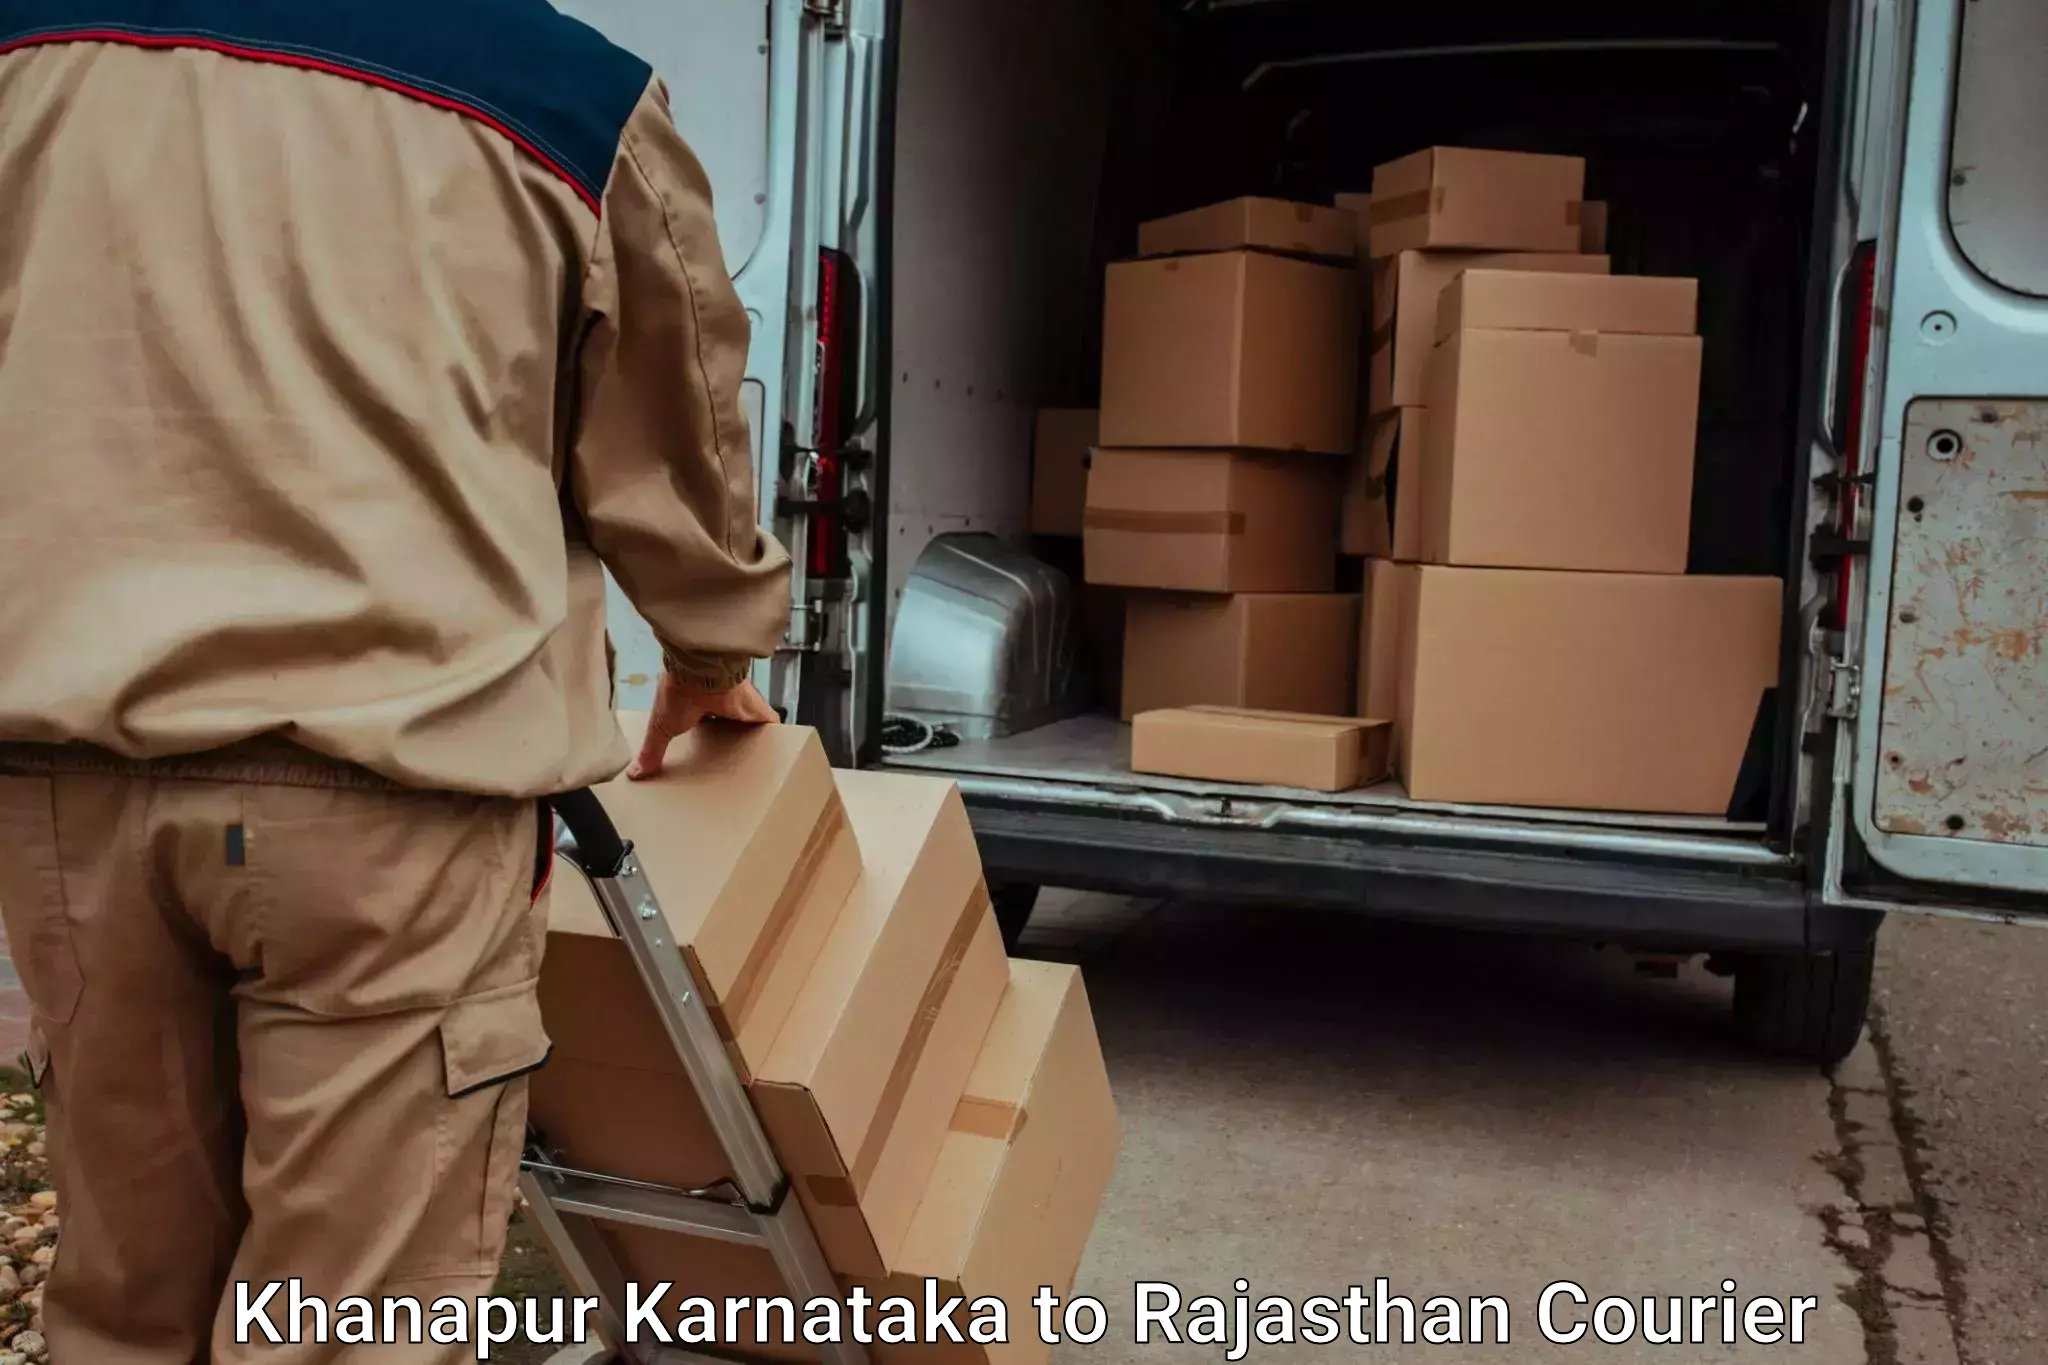 Doorstep luggage pickup Khanapur Karnataka to Bhopalgarh